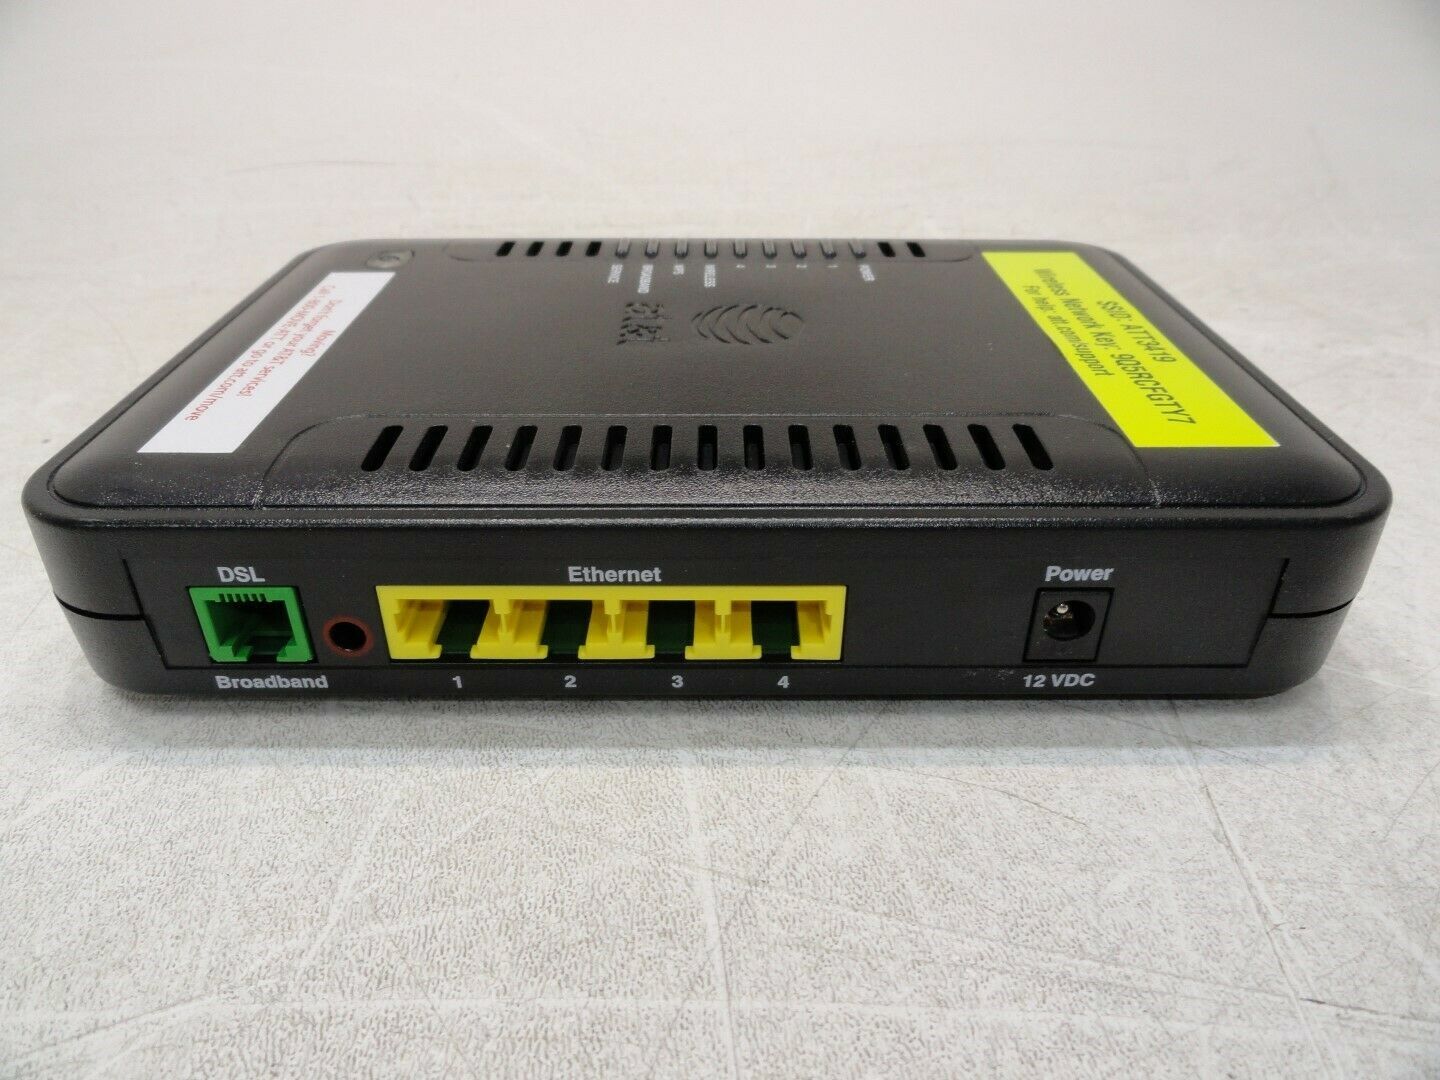 AT&T 7550 Netgear B90-755025-15 DSL Modem Router - Modem-Router Combos